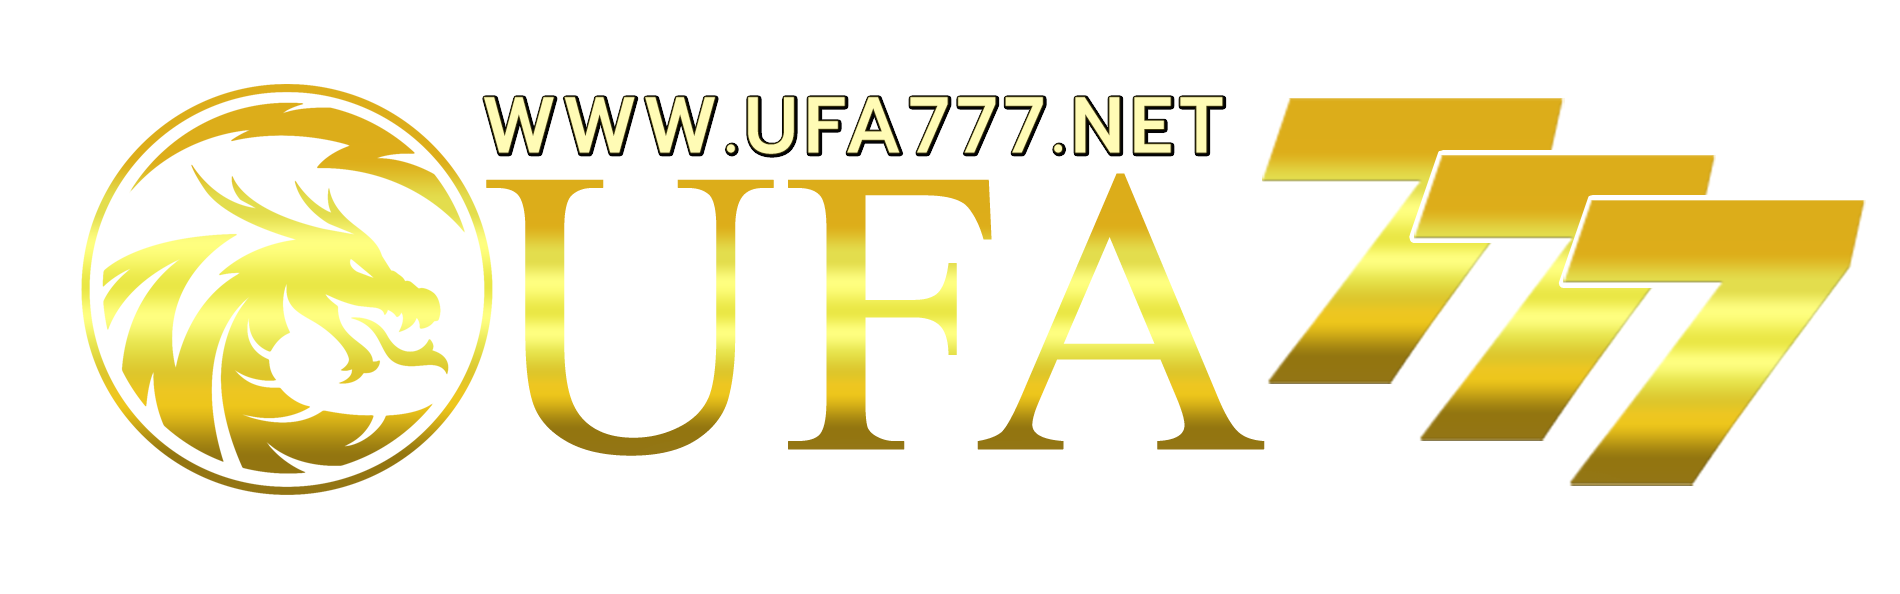 ufa77